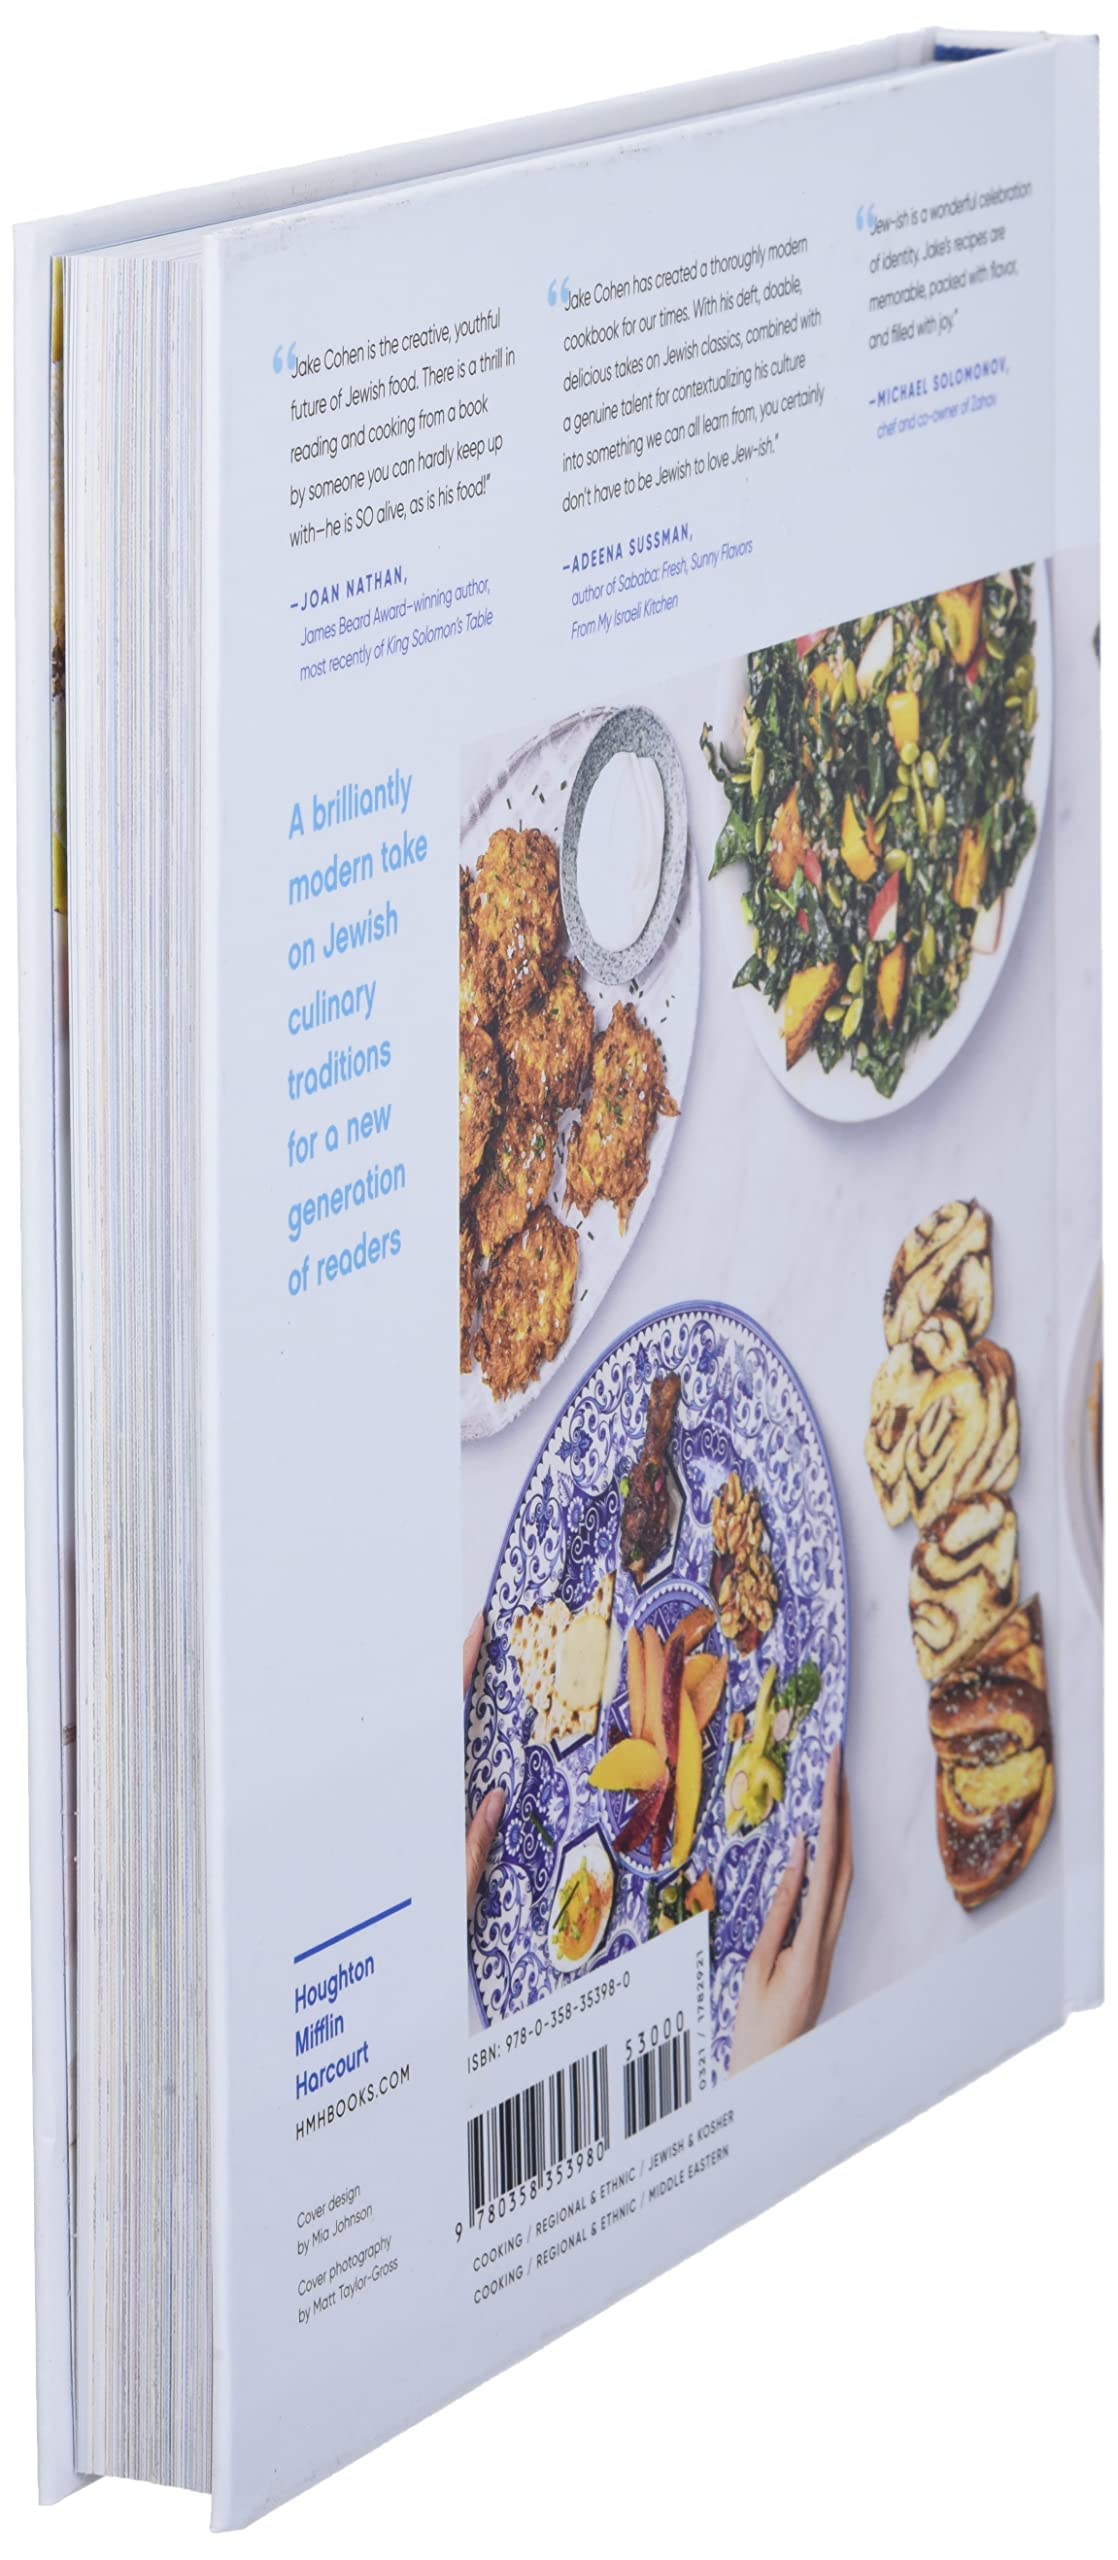 Jew-Ish: A Cookbook: Reinvented Recipes from a Modern Mensch